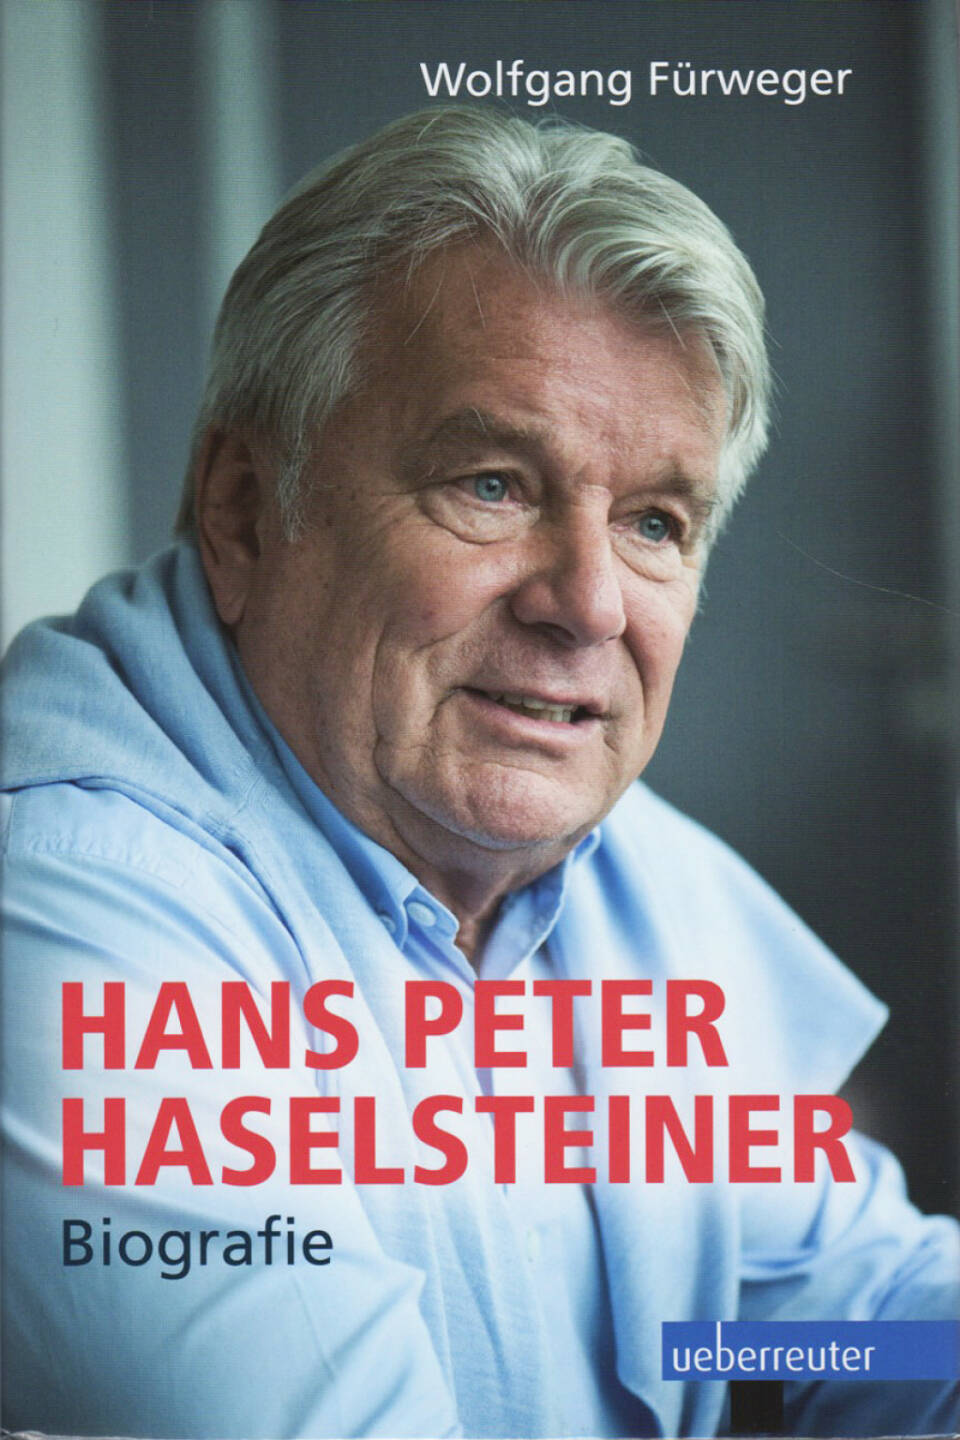 http://boerse-social.com/financebooks/show/wolfgang_furweger_-_hans_peter_haselsteiner_biografie